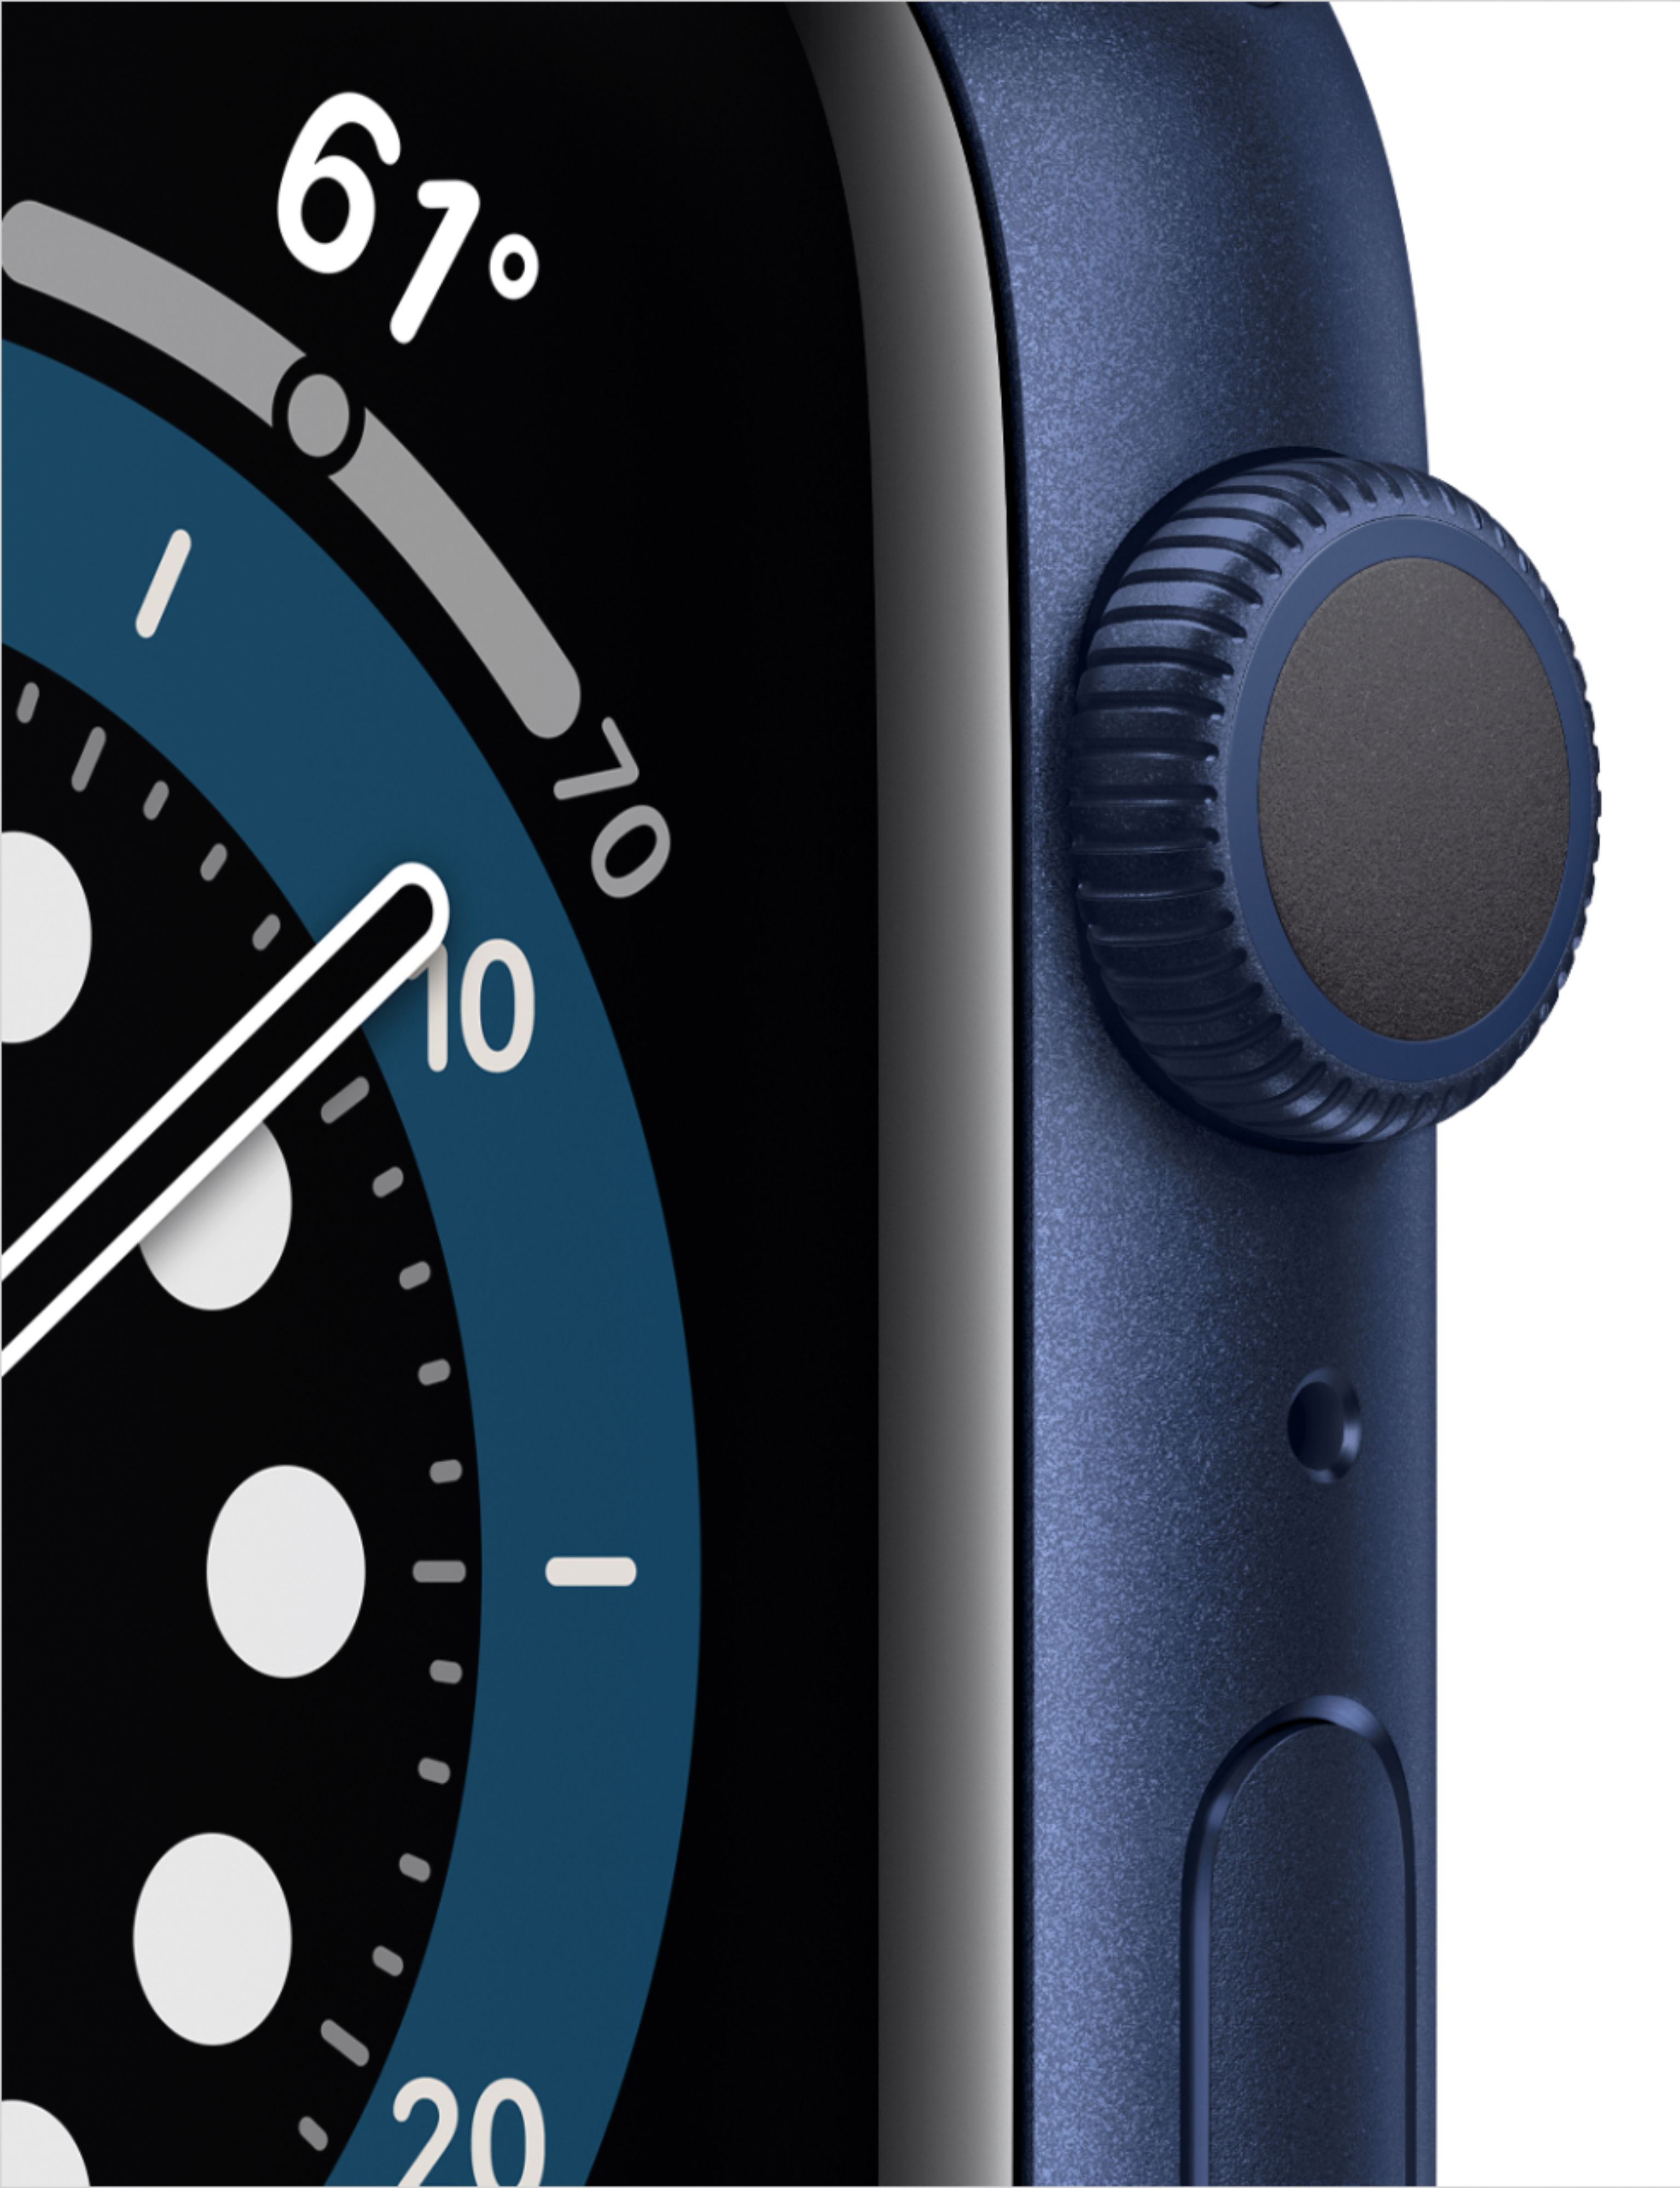 Best Buy: Apple Watch Series 6 (GPS) 44mm Aluminum Case with Deep Navy  Sport Band Blue M00J3LL/A